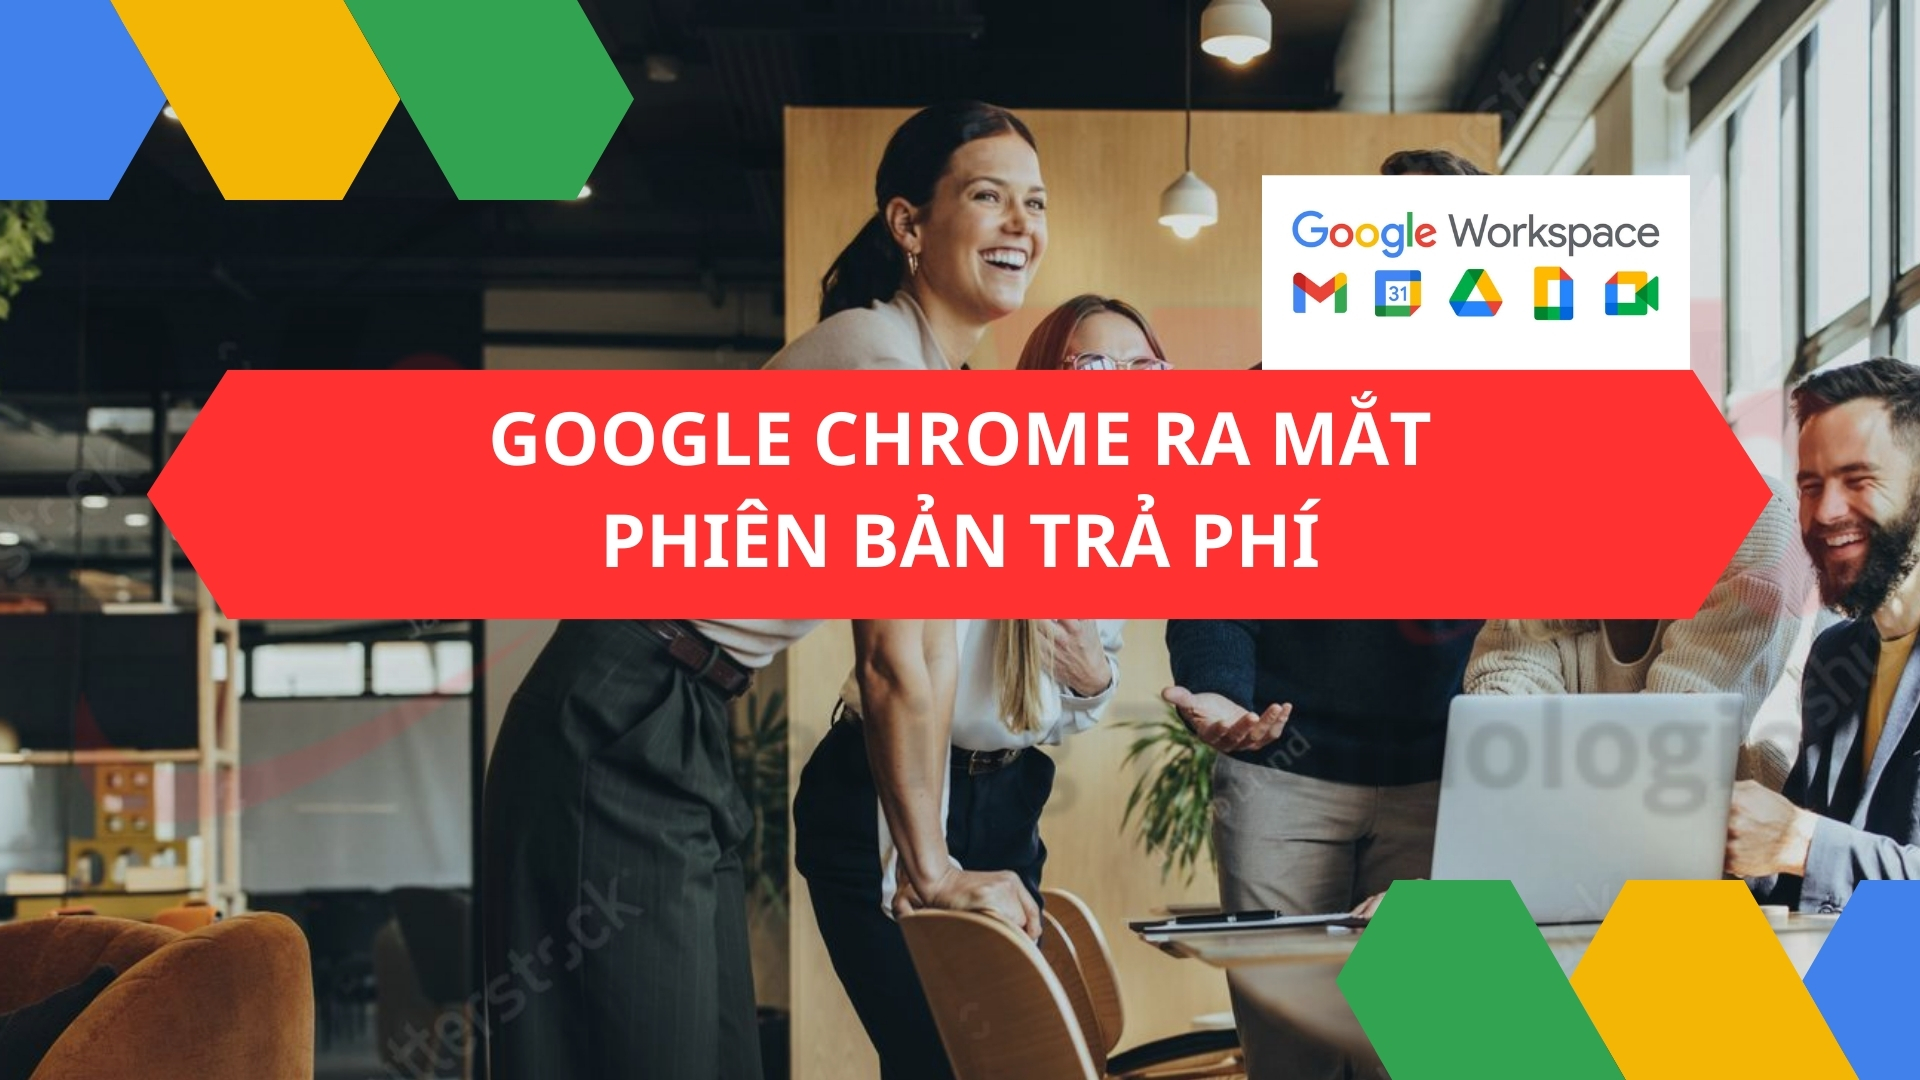 Google Chrome ra mắt phiên bản trả phí